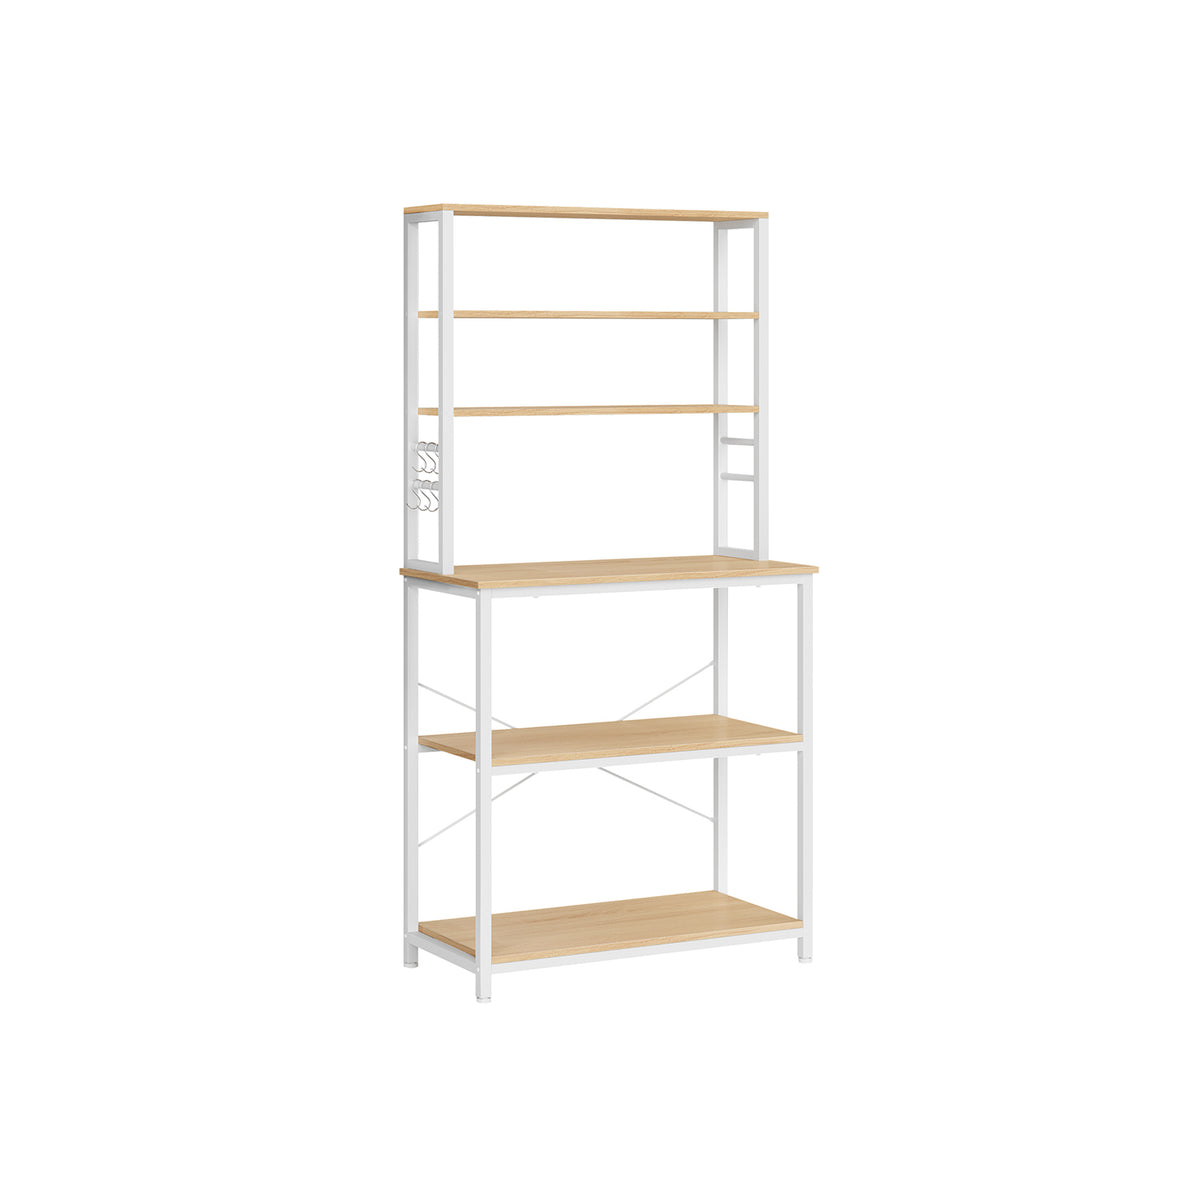 HAVERN estante, bambú, 60 cm - IKEA